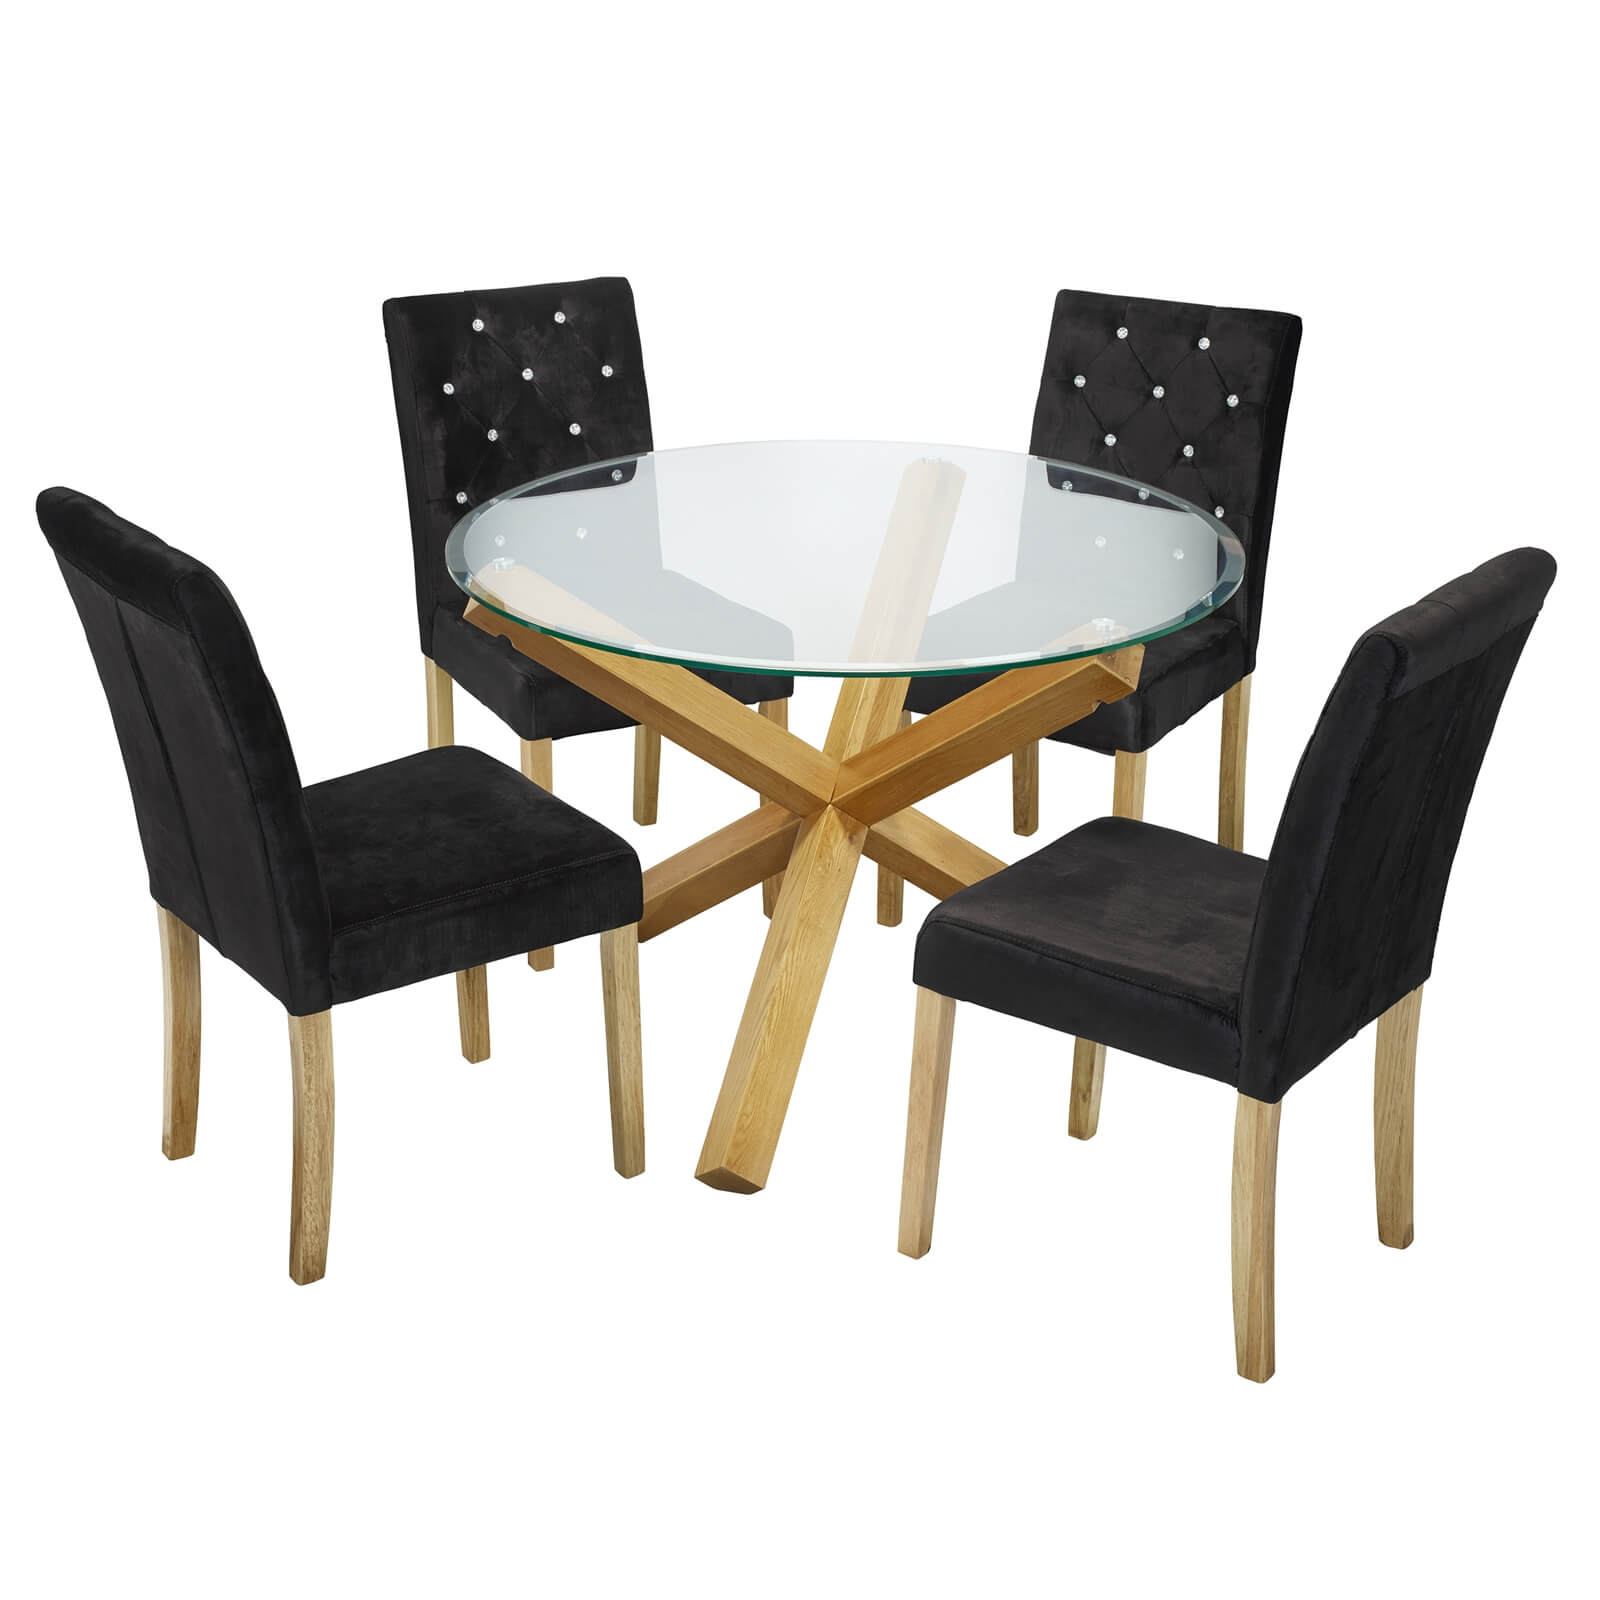 Oporto 4 Seater Dining Set - Paris Dining Chairs - Black